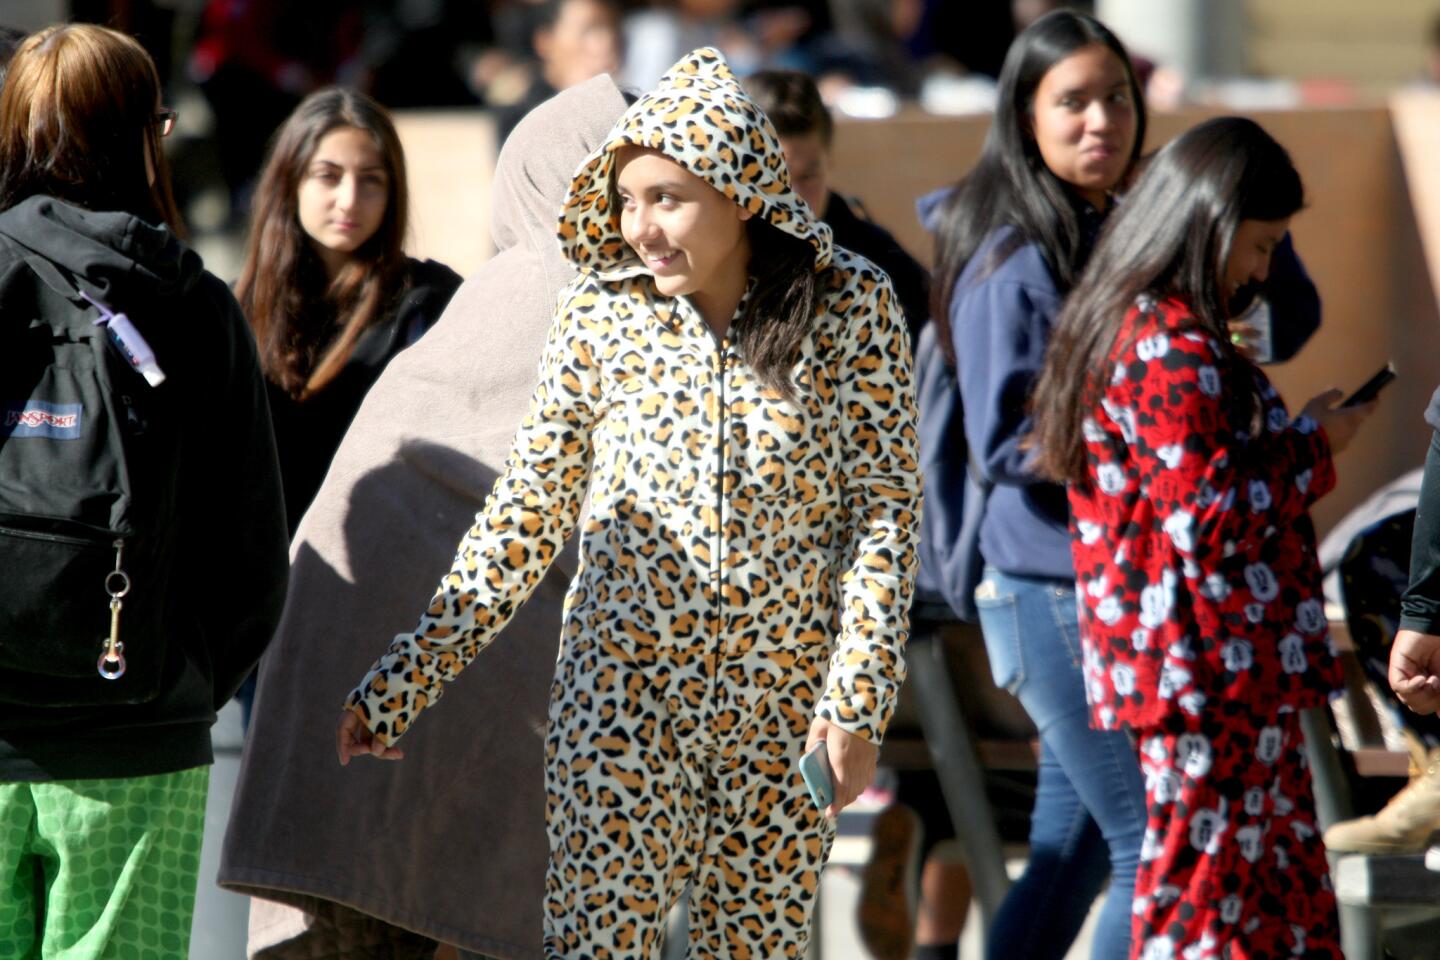 As part of Spirit Week, sophomore Karla Yanes wore her cheetah-print pajamas during Pajama Day at Glendale High School in Glendale on Thursday, November 5, 2015.